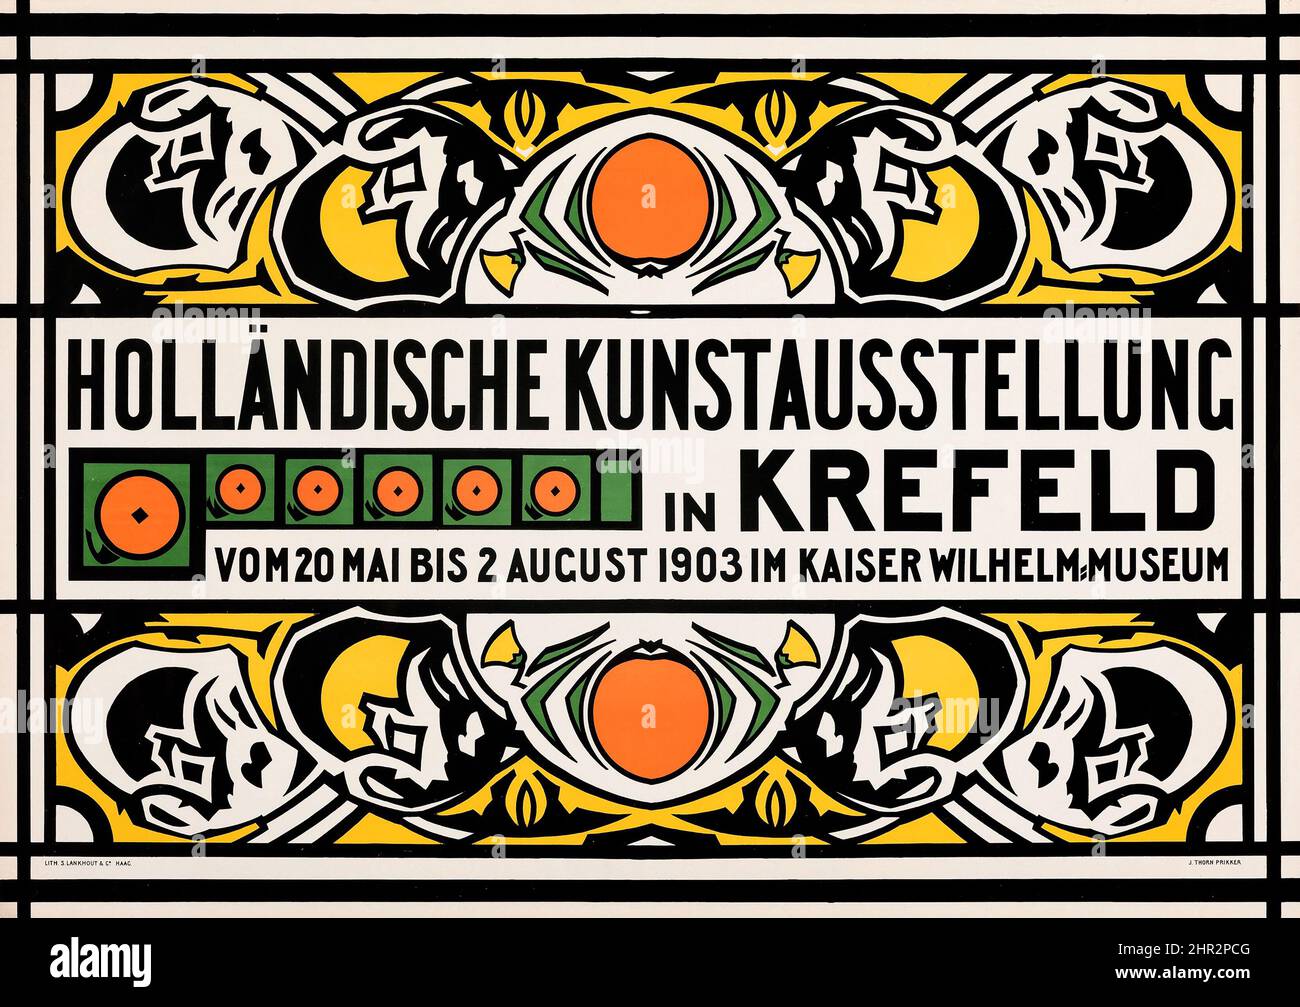 Dutch Art Exhibition (Krefeld Kaiser Wilhelm Museum, 1903). German Exhibition Poster. Art Nouveau style. Stock Photo